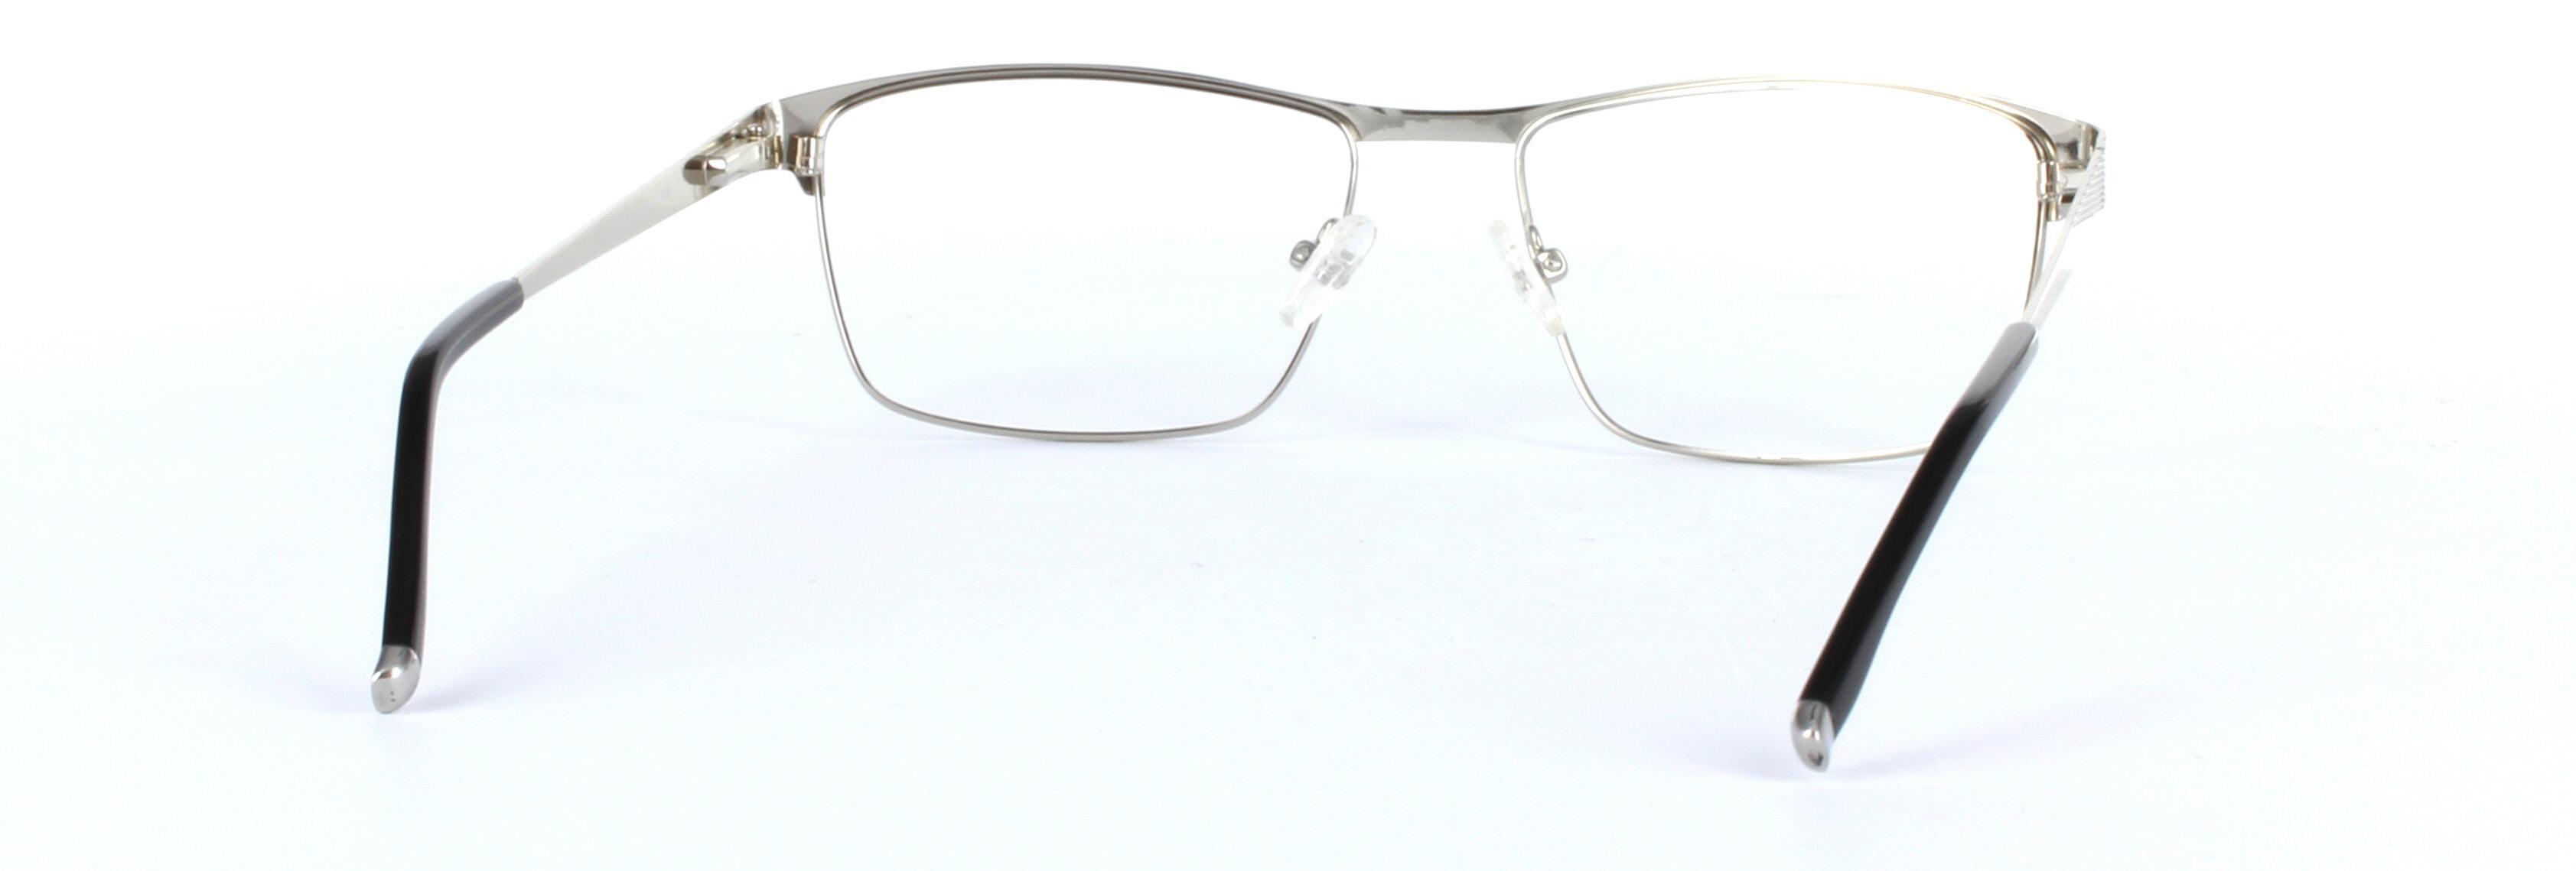 Silver Full Rim Rectangular Metal Glasses Stara Zagora - Image View 3